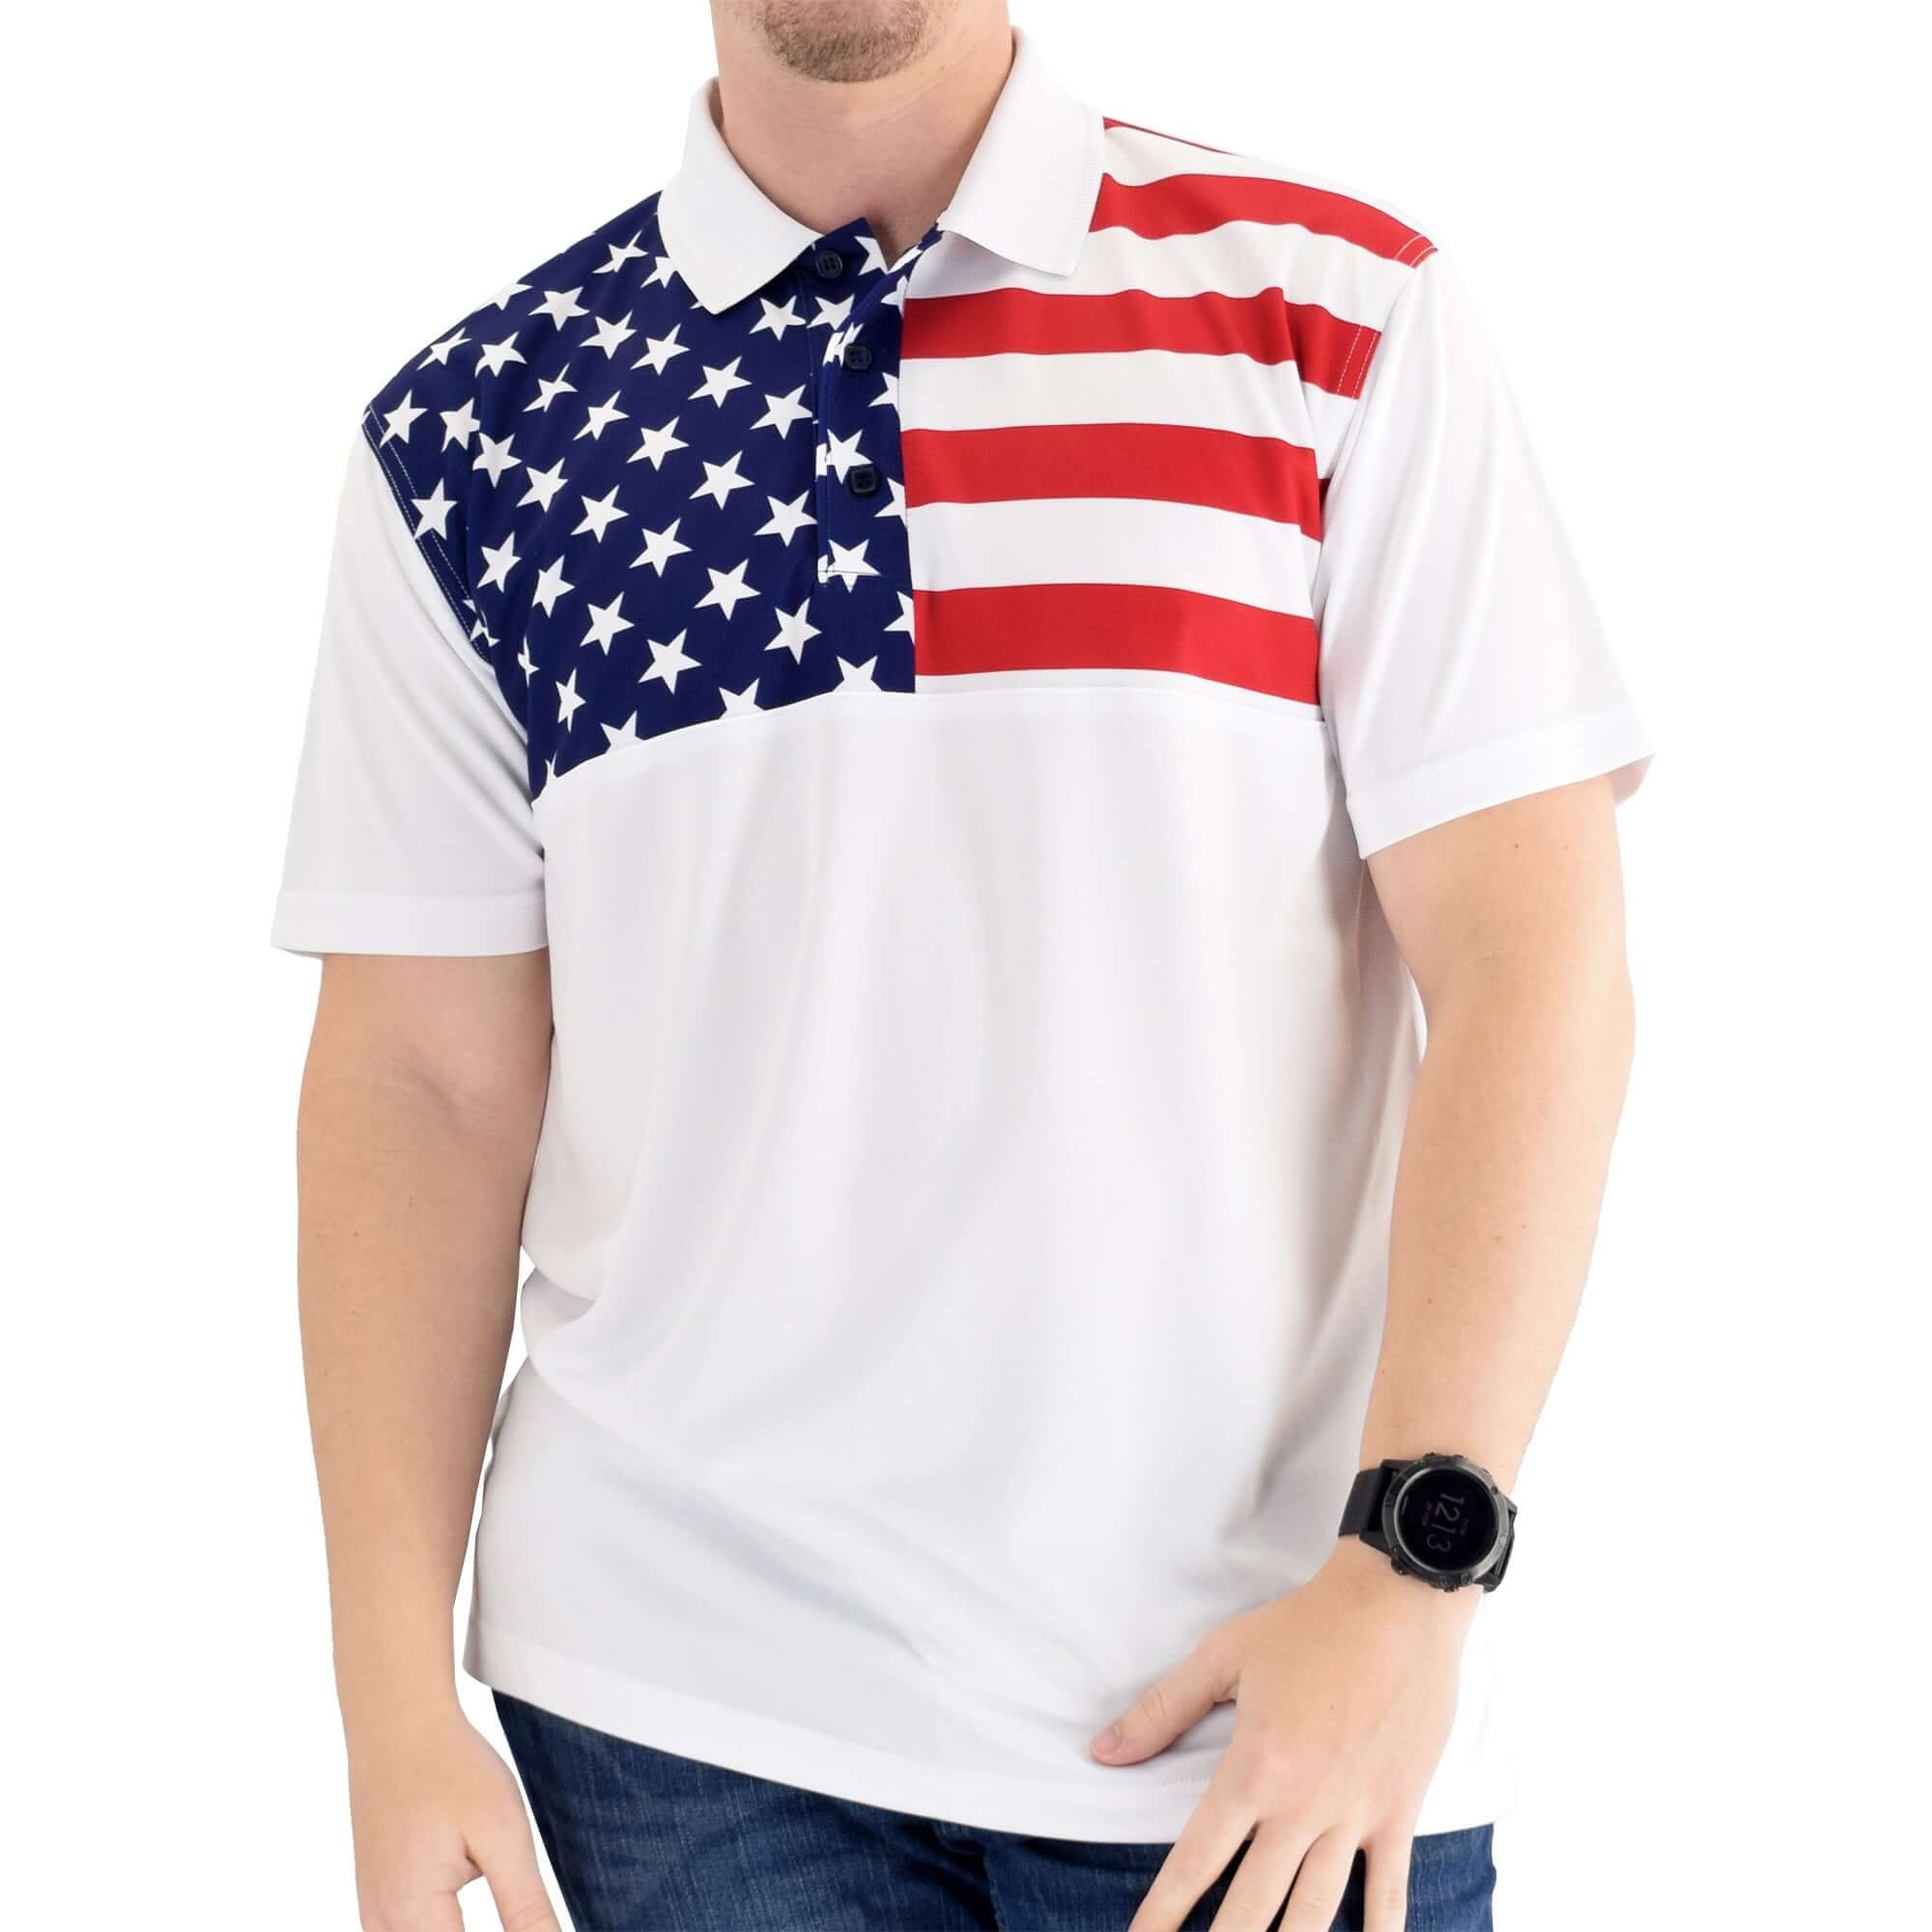 USA Flag Stars and Stripes Polo Shirt Made in the USA - the flag shirt